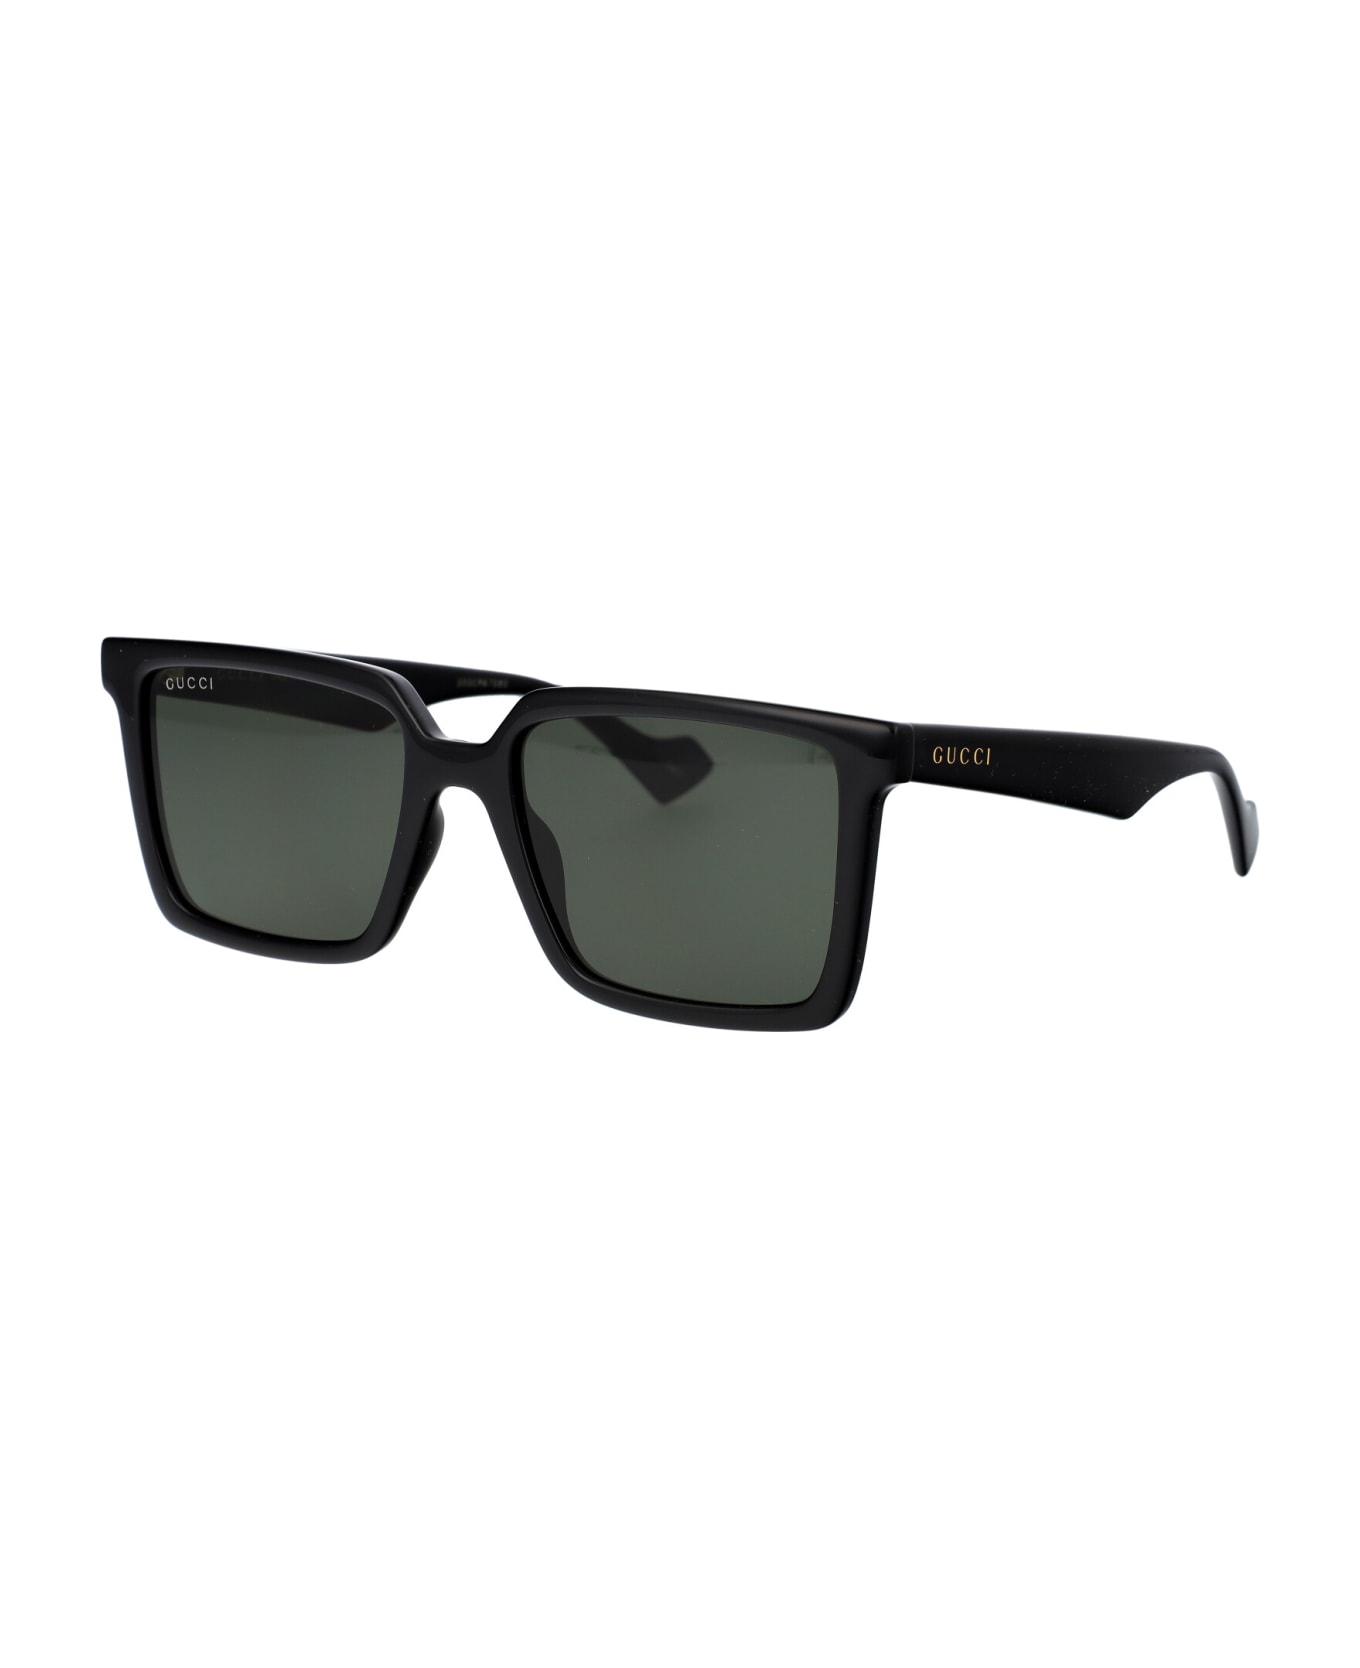 Gucci Eyewear Gg1540s Sunglasses - 001 BLACK BLACK GREY